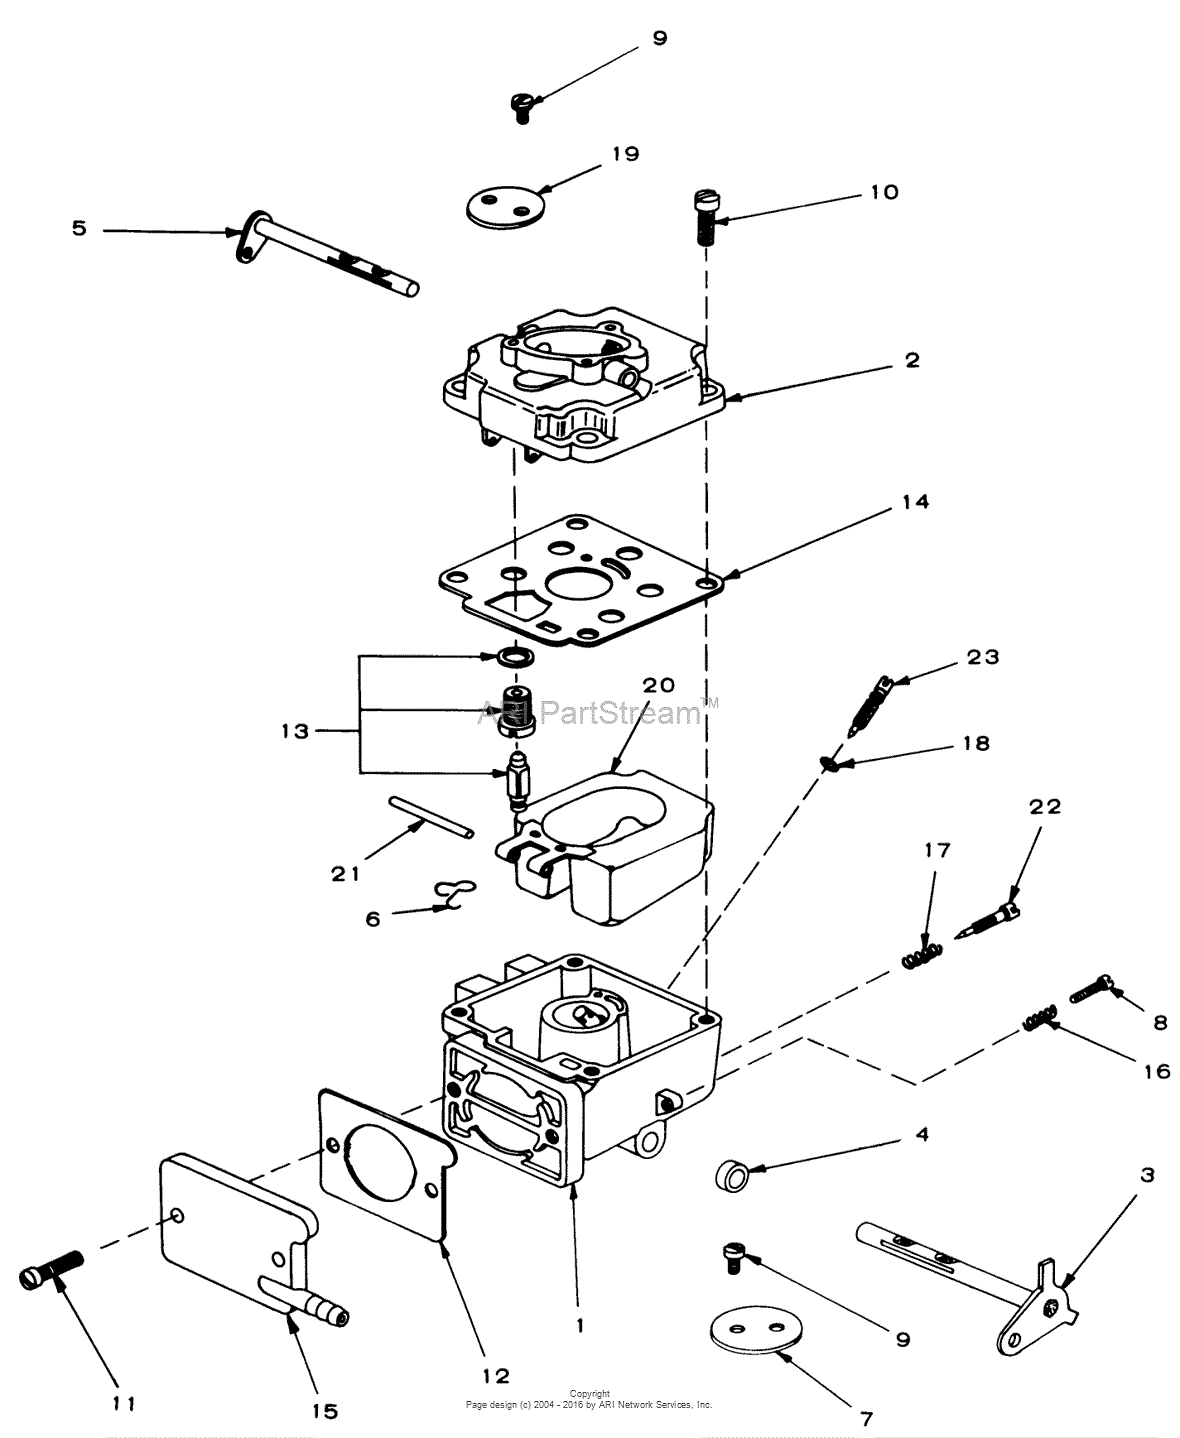 [DIAGRAM] 18 Hp Onan Engine Diagram